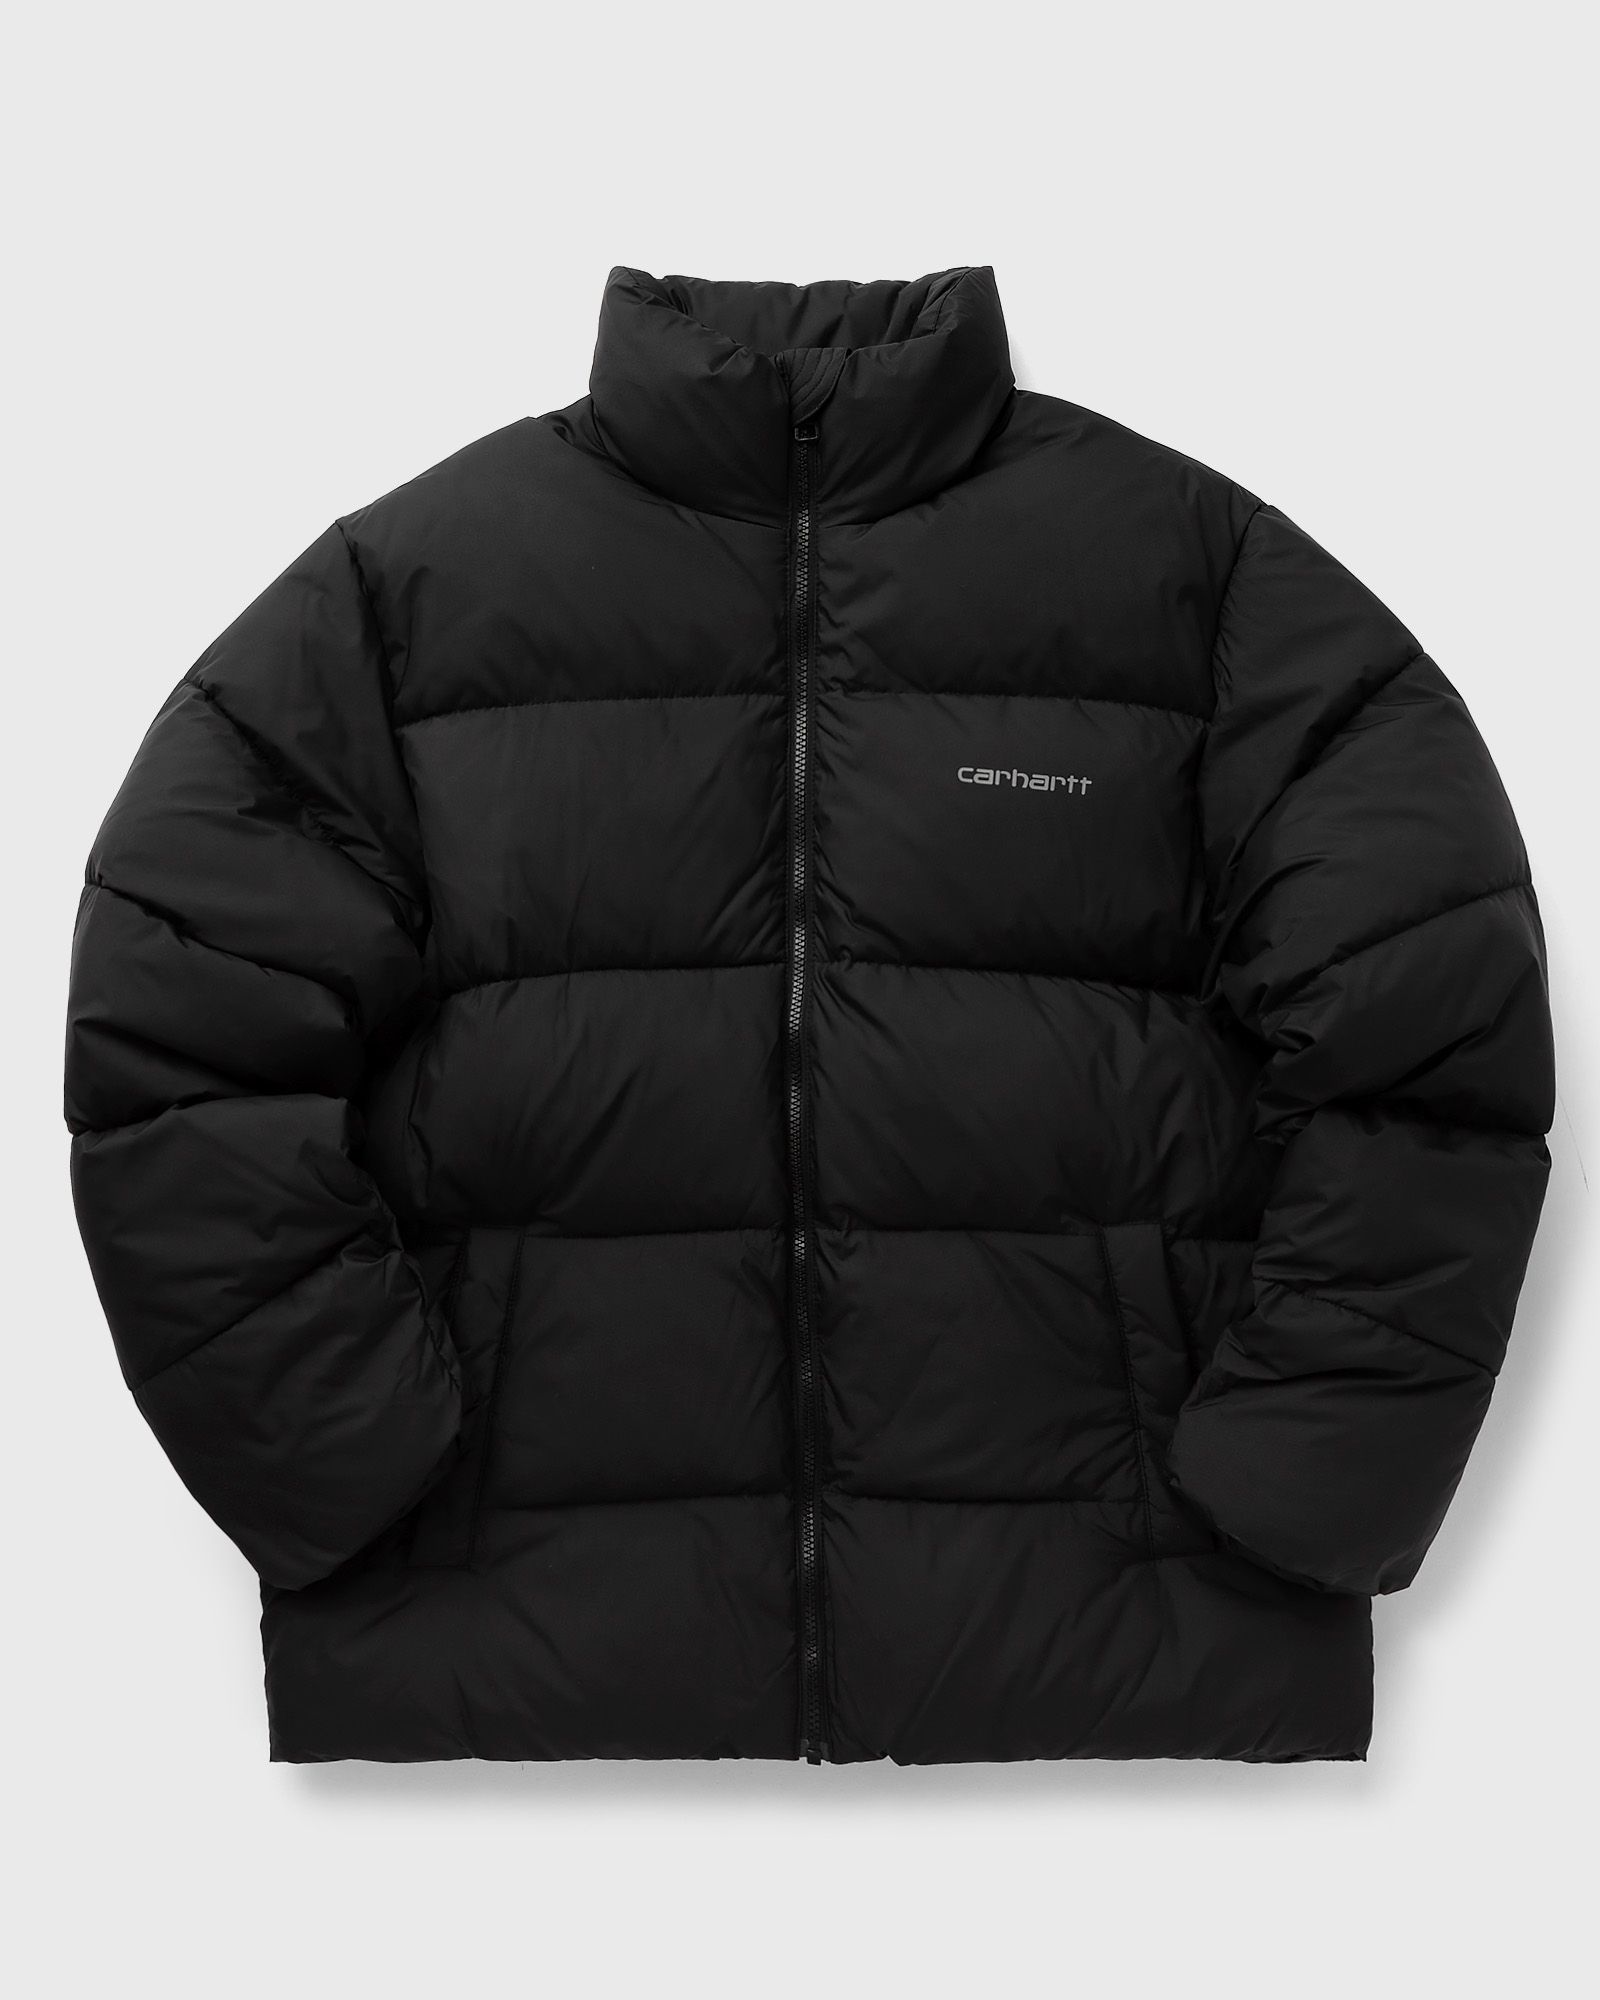 Carhartt WIP - springfield jacket men down & puffer jackets black in größe:xl